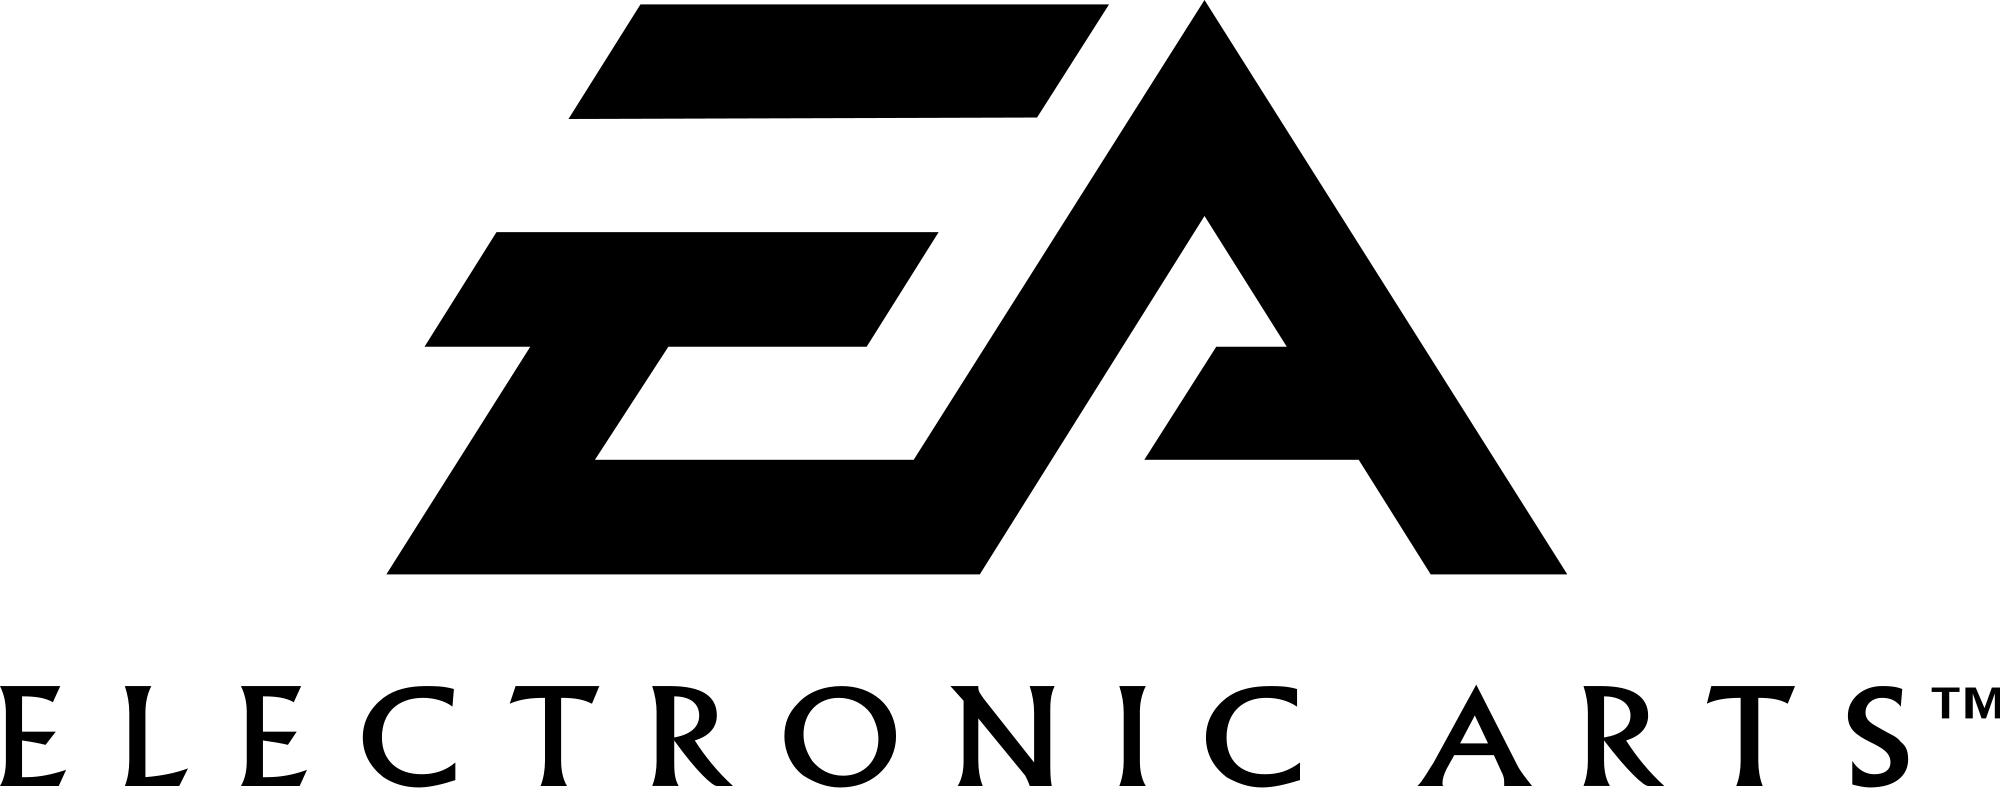 Black Electronic Logo - File:Electronic Arts logo black.svg - Wikimedia Commons